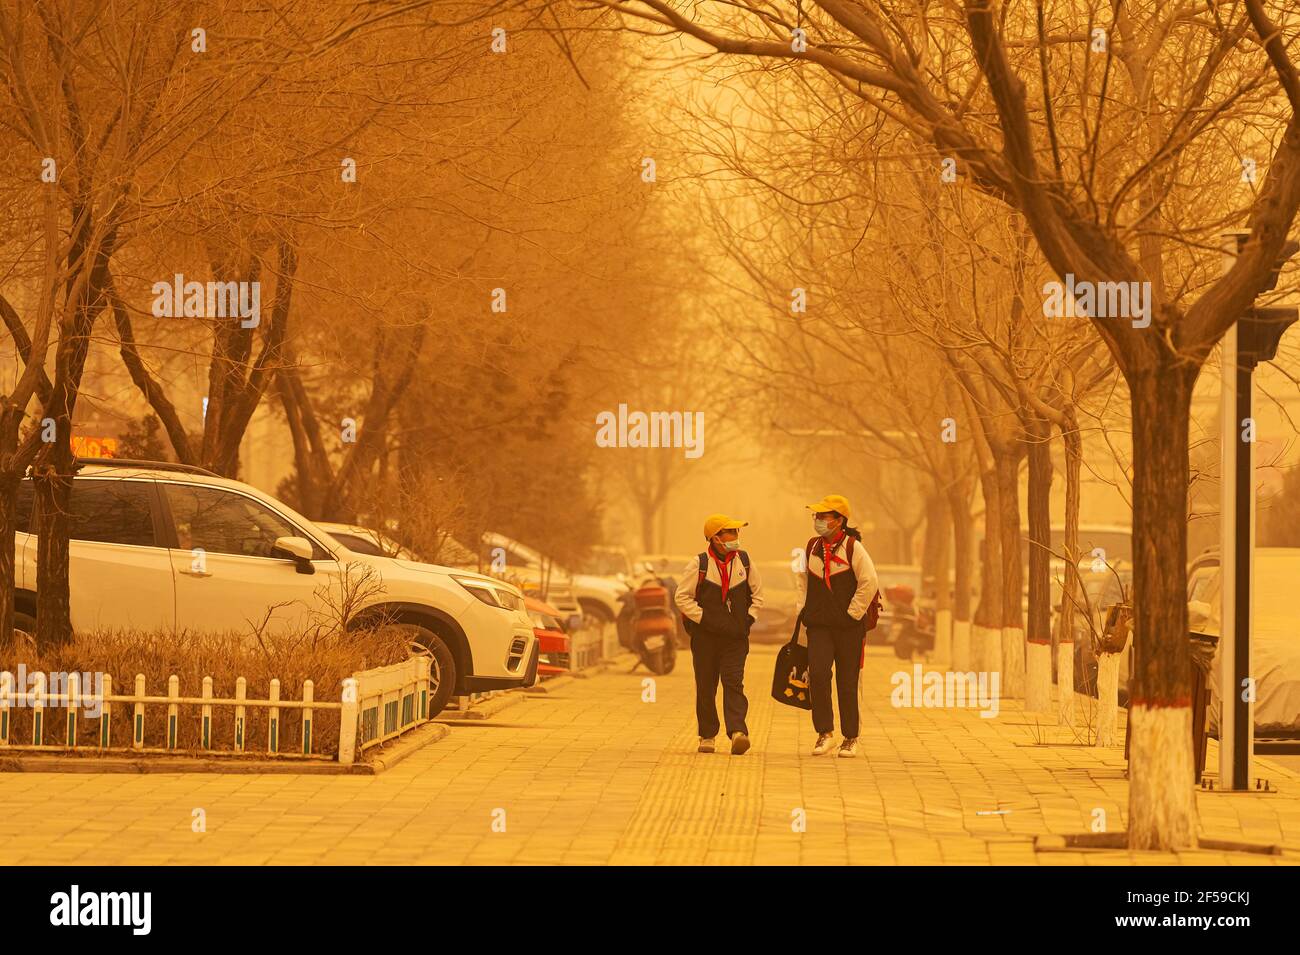 JIUQUAN, CHINA - MARCH 15, 2021 - The strongest sandstorm in a decade hits Jiuquan City, northwest China's Gansu Province, March 15, 2021. (Photo by Yitiefanghong / Costfoto/Sipa USA) Stock Photo